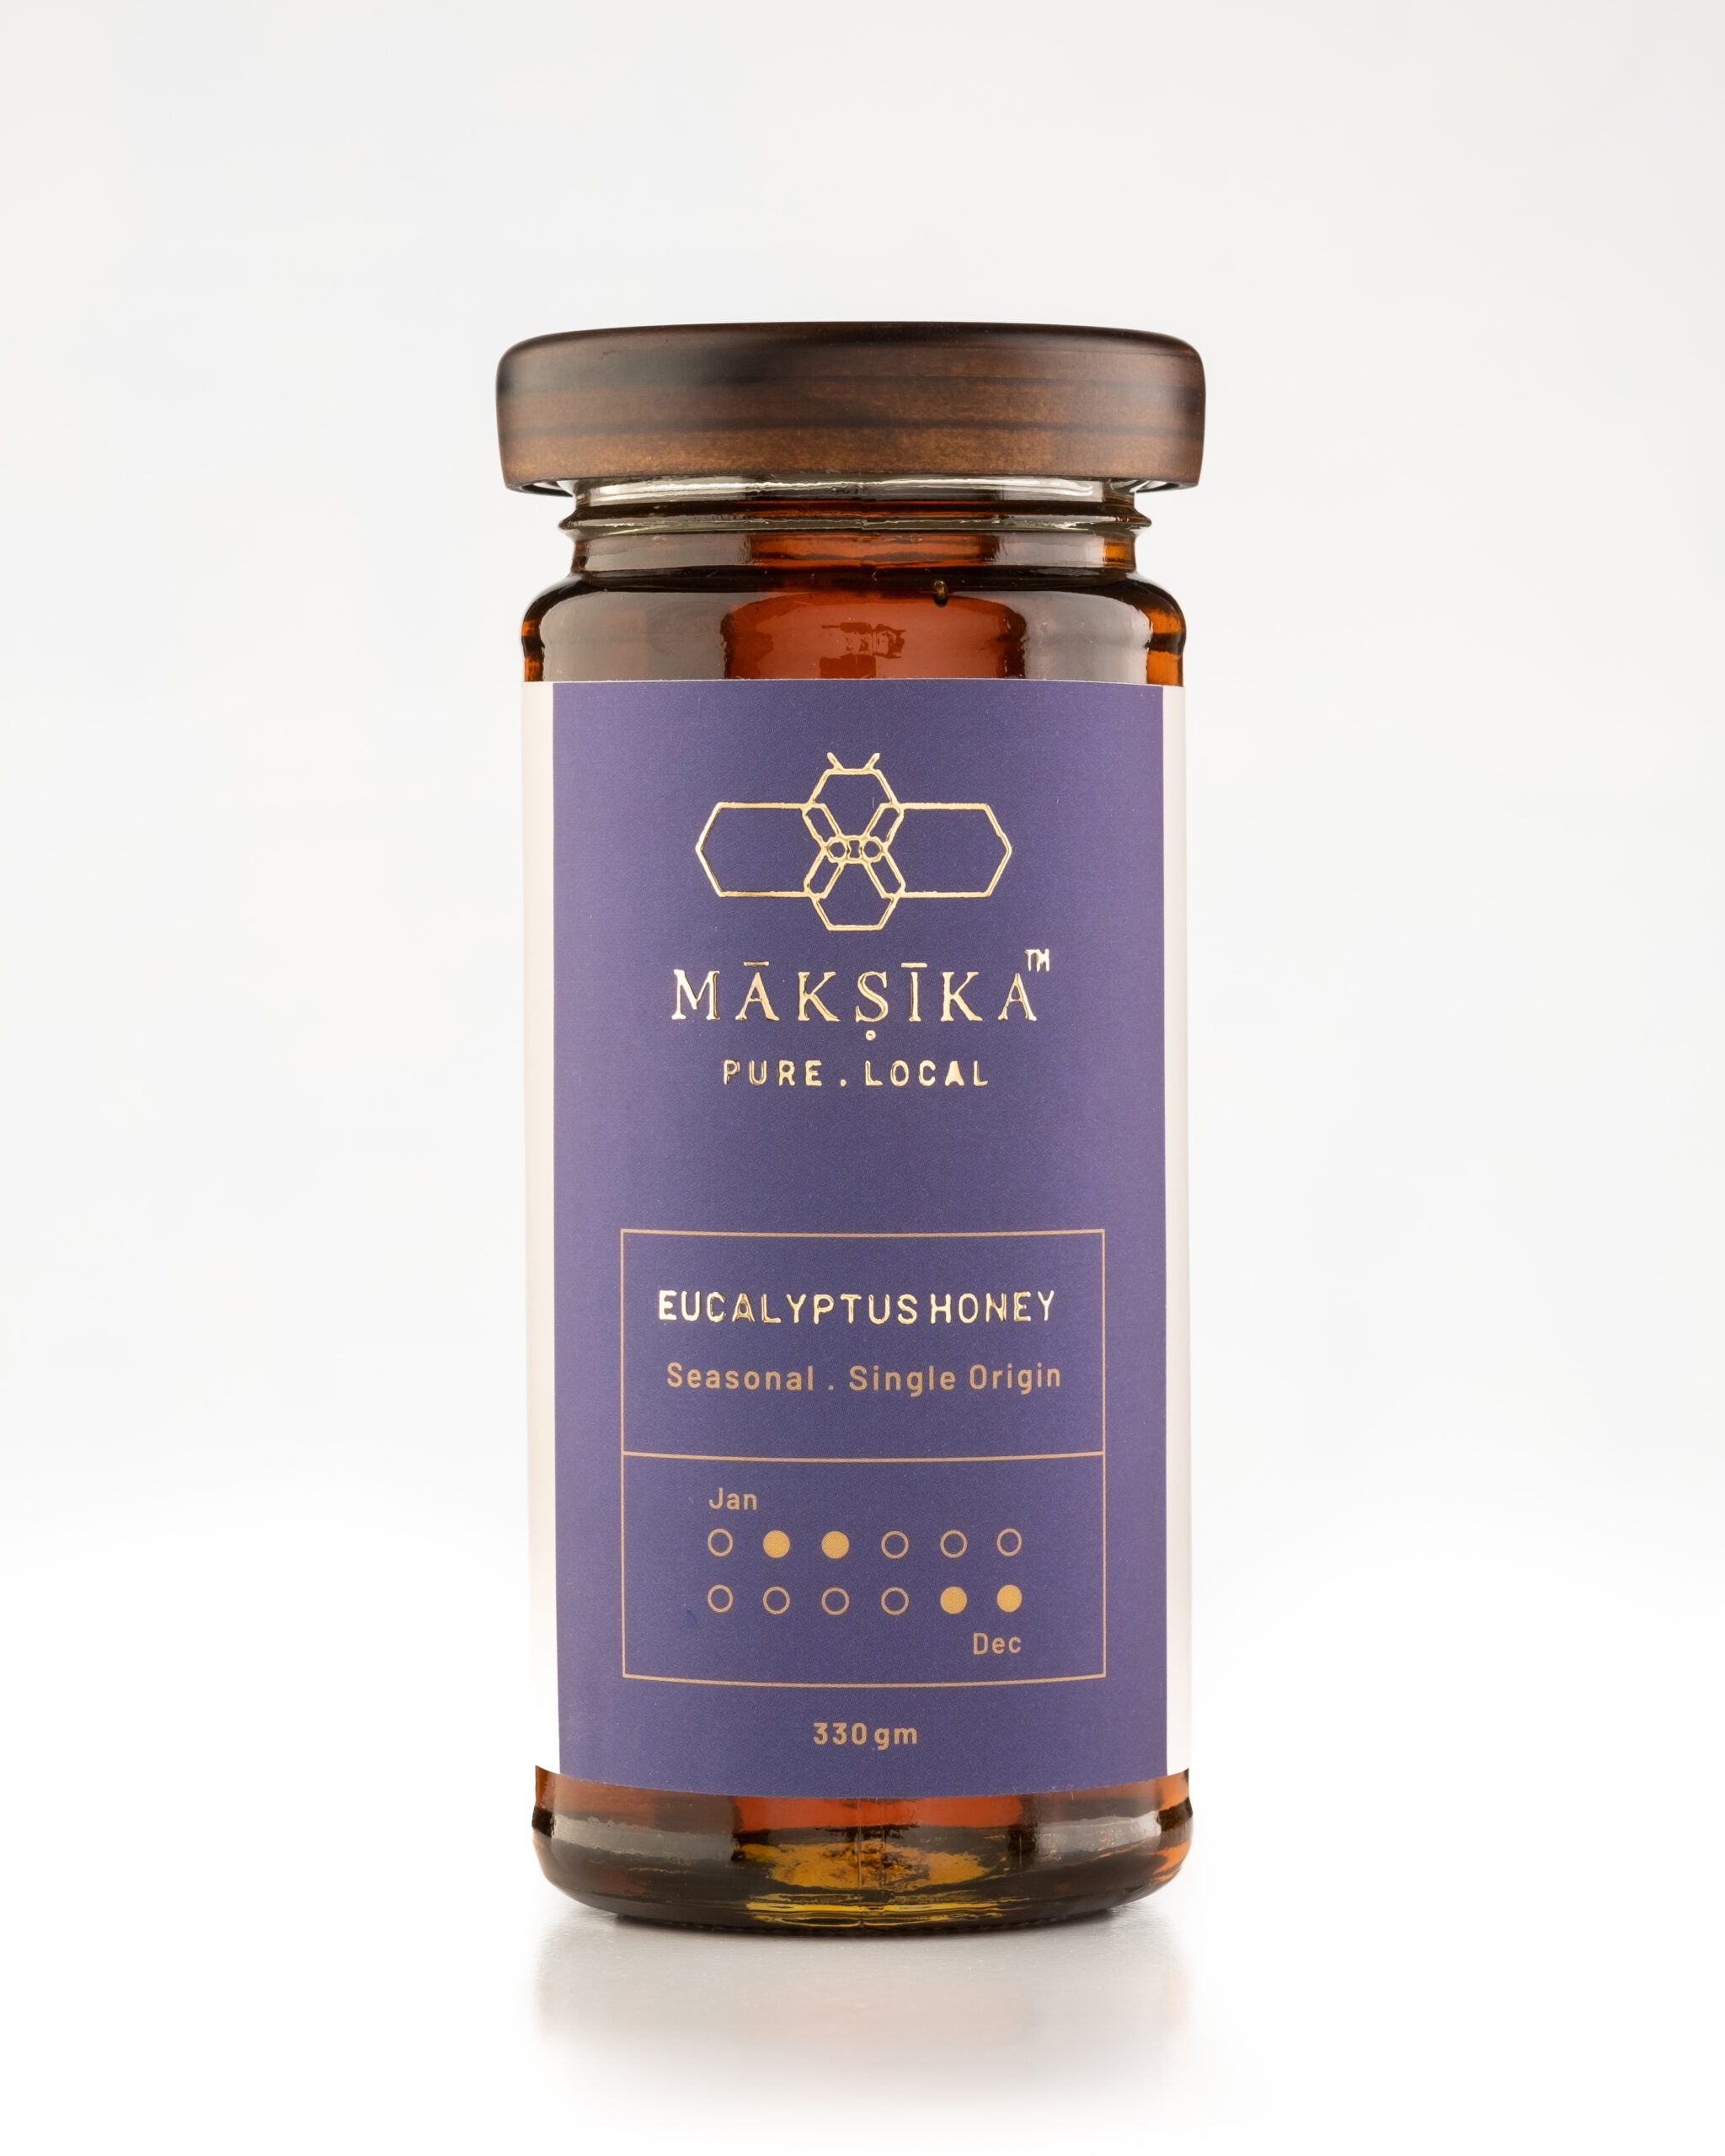 Buy Eucalyptus Honey from Maksika Honey